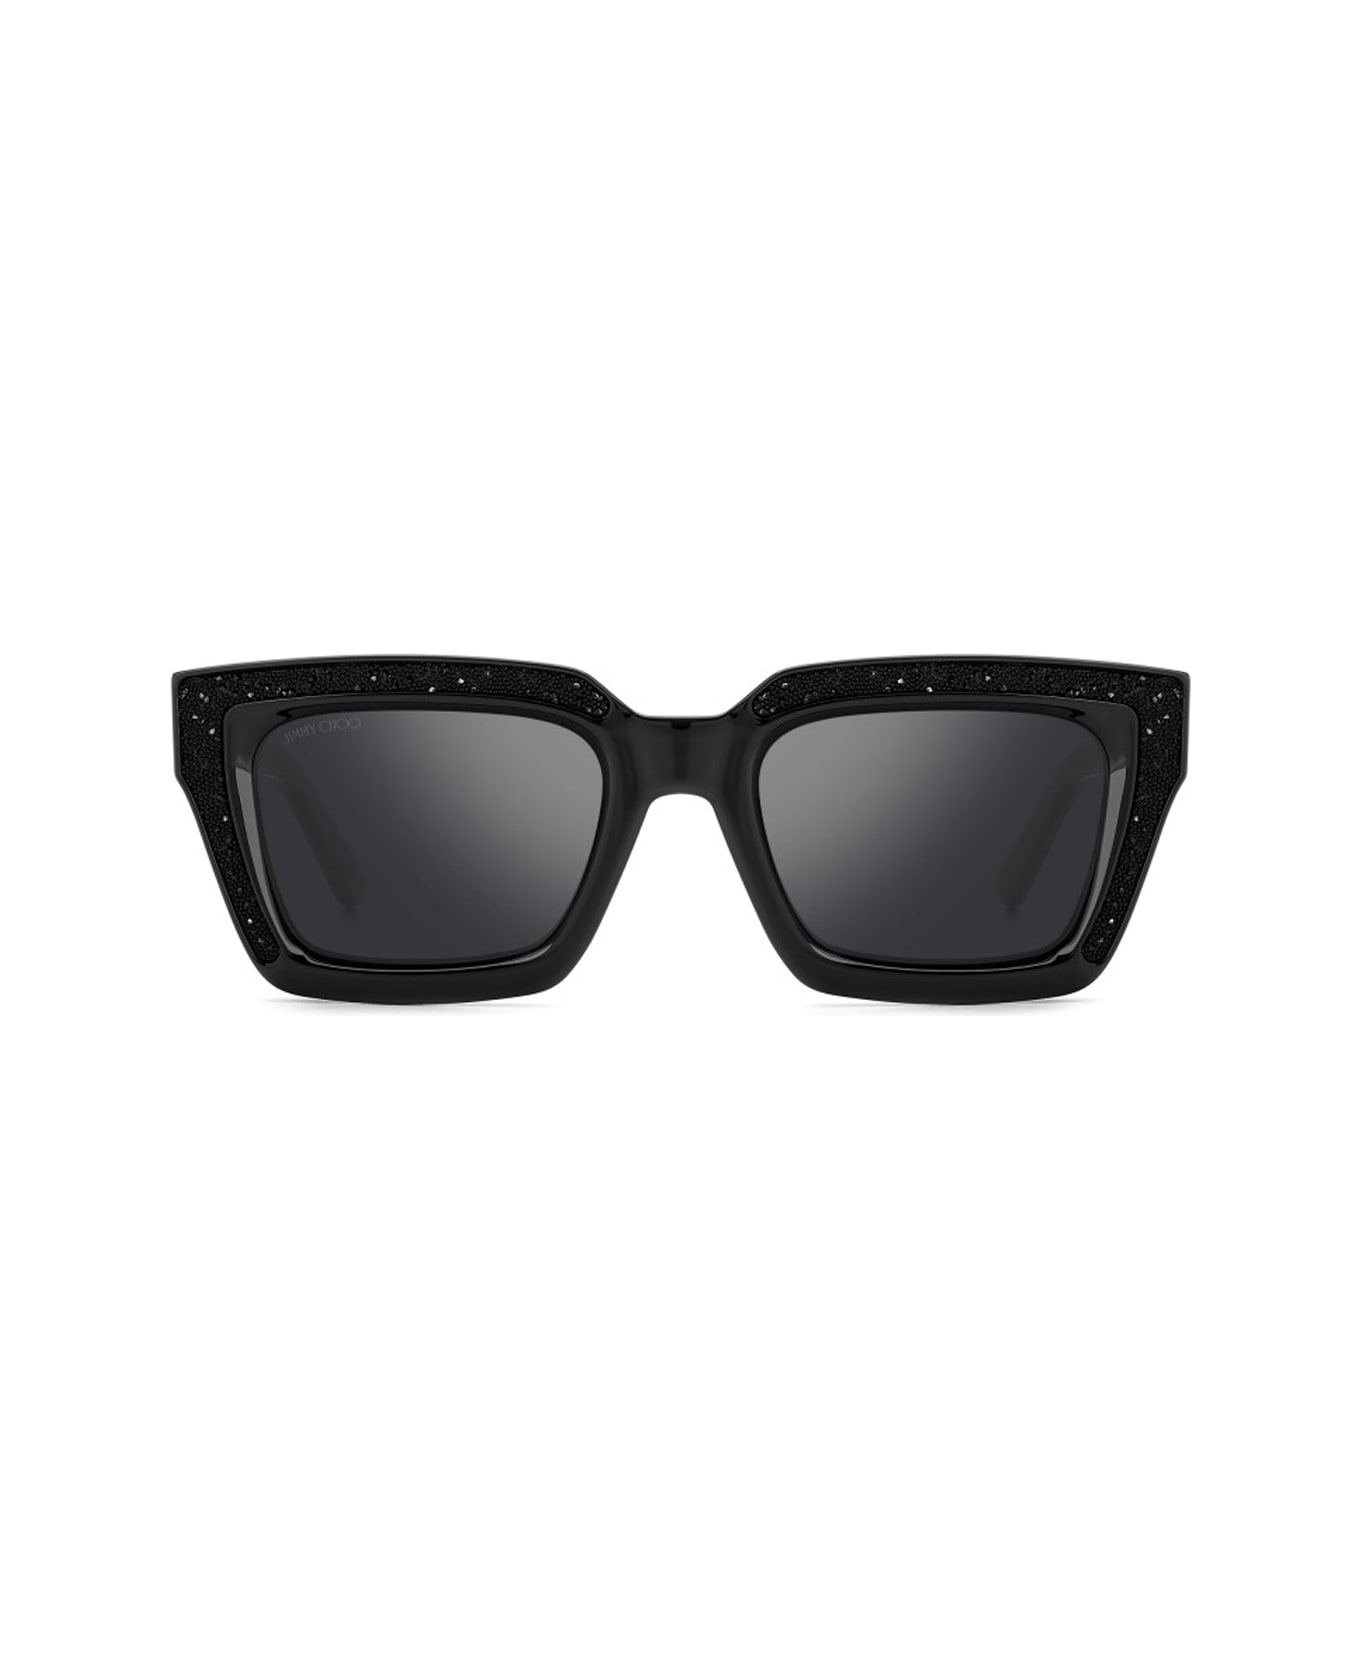 Jimmy Choo Eyewear Megs/s 807/t4 Sunglasses Saltu - Nero